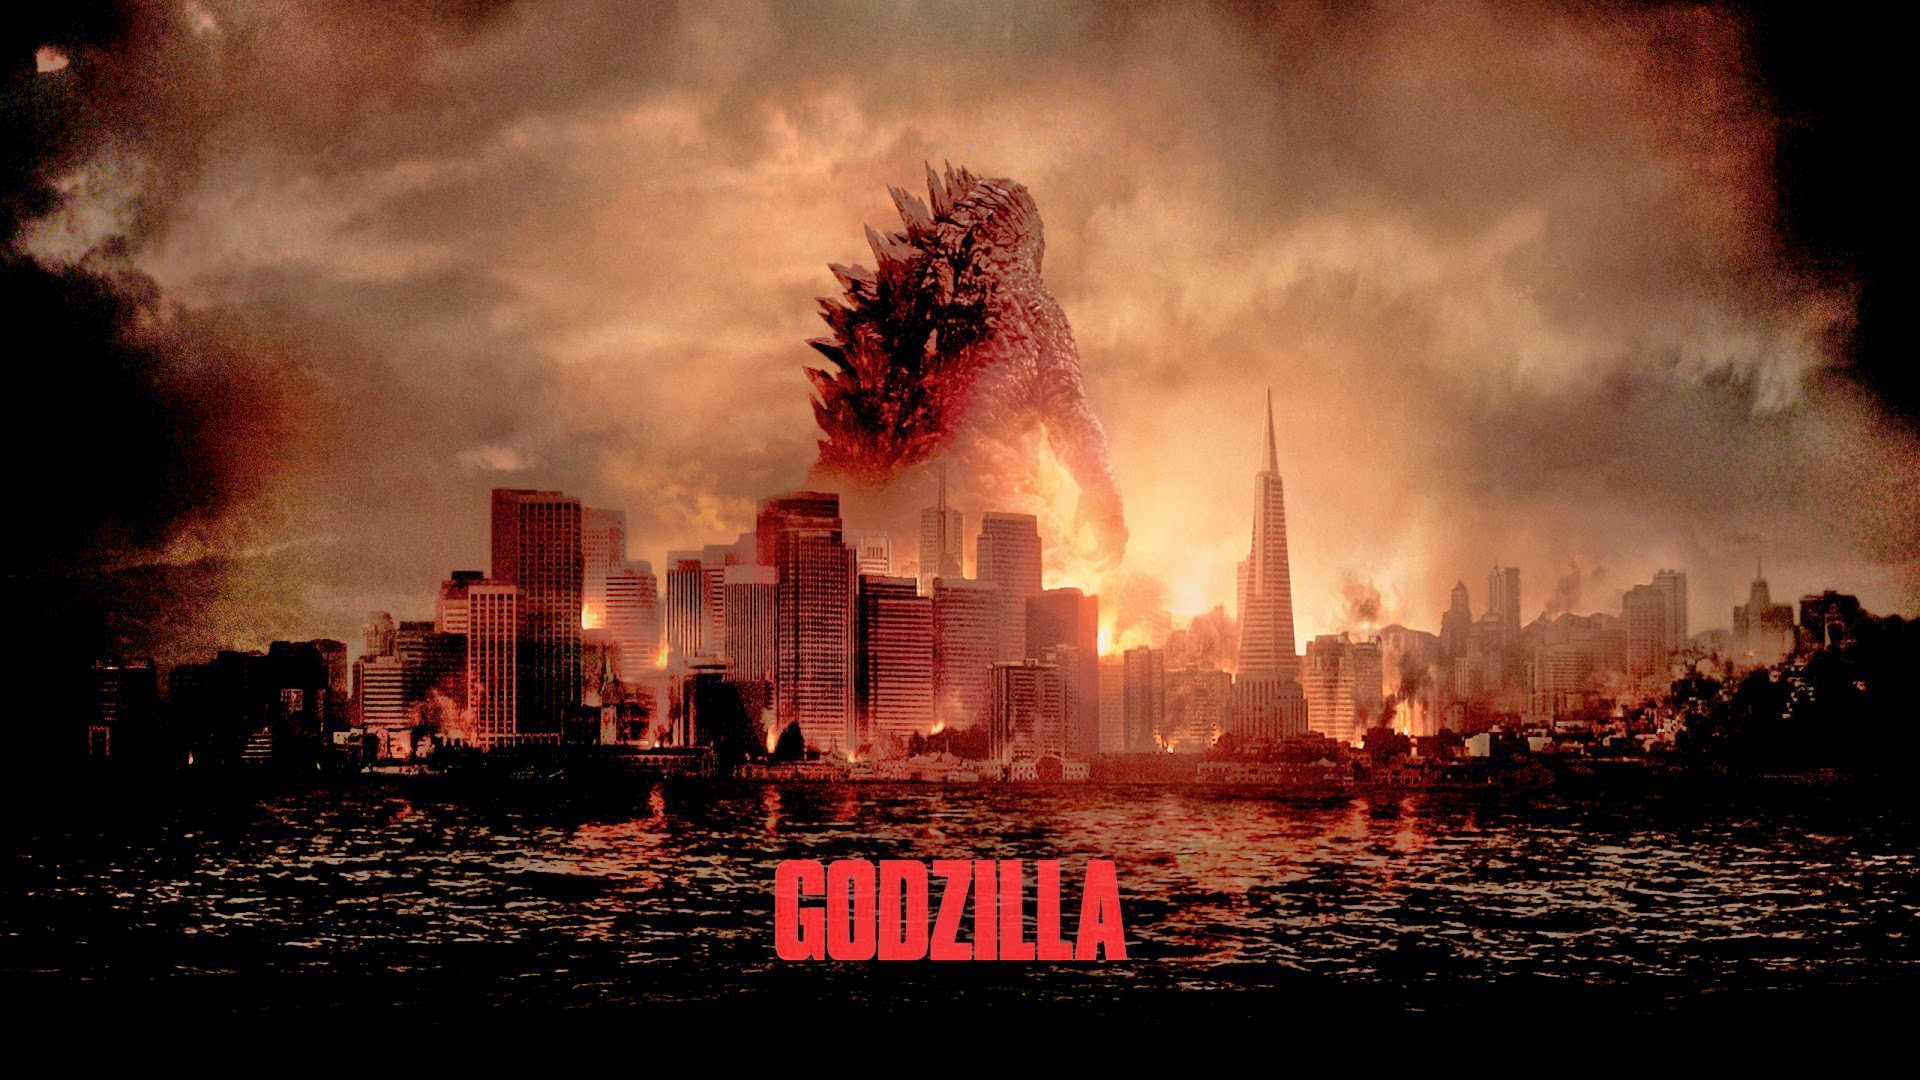 Download New Godzilla Movie Wallpaper Backgrounds Hd 1920x1080px